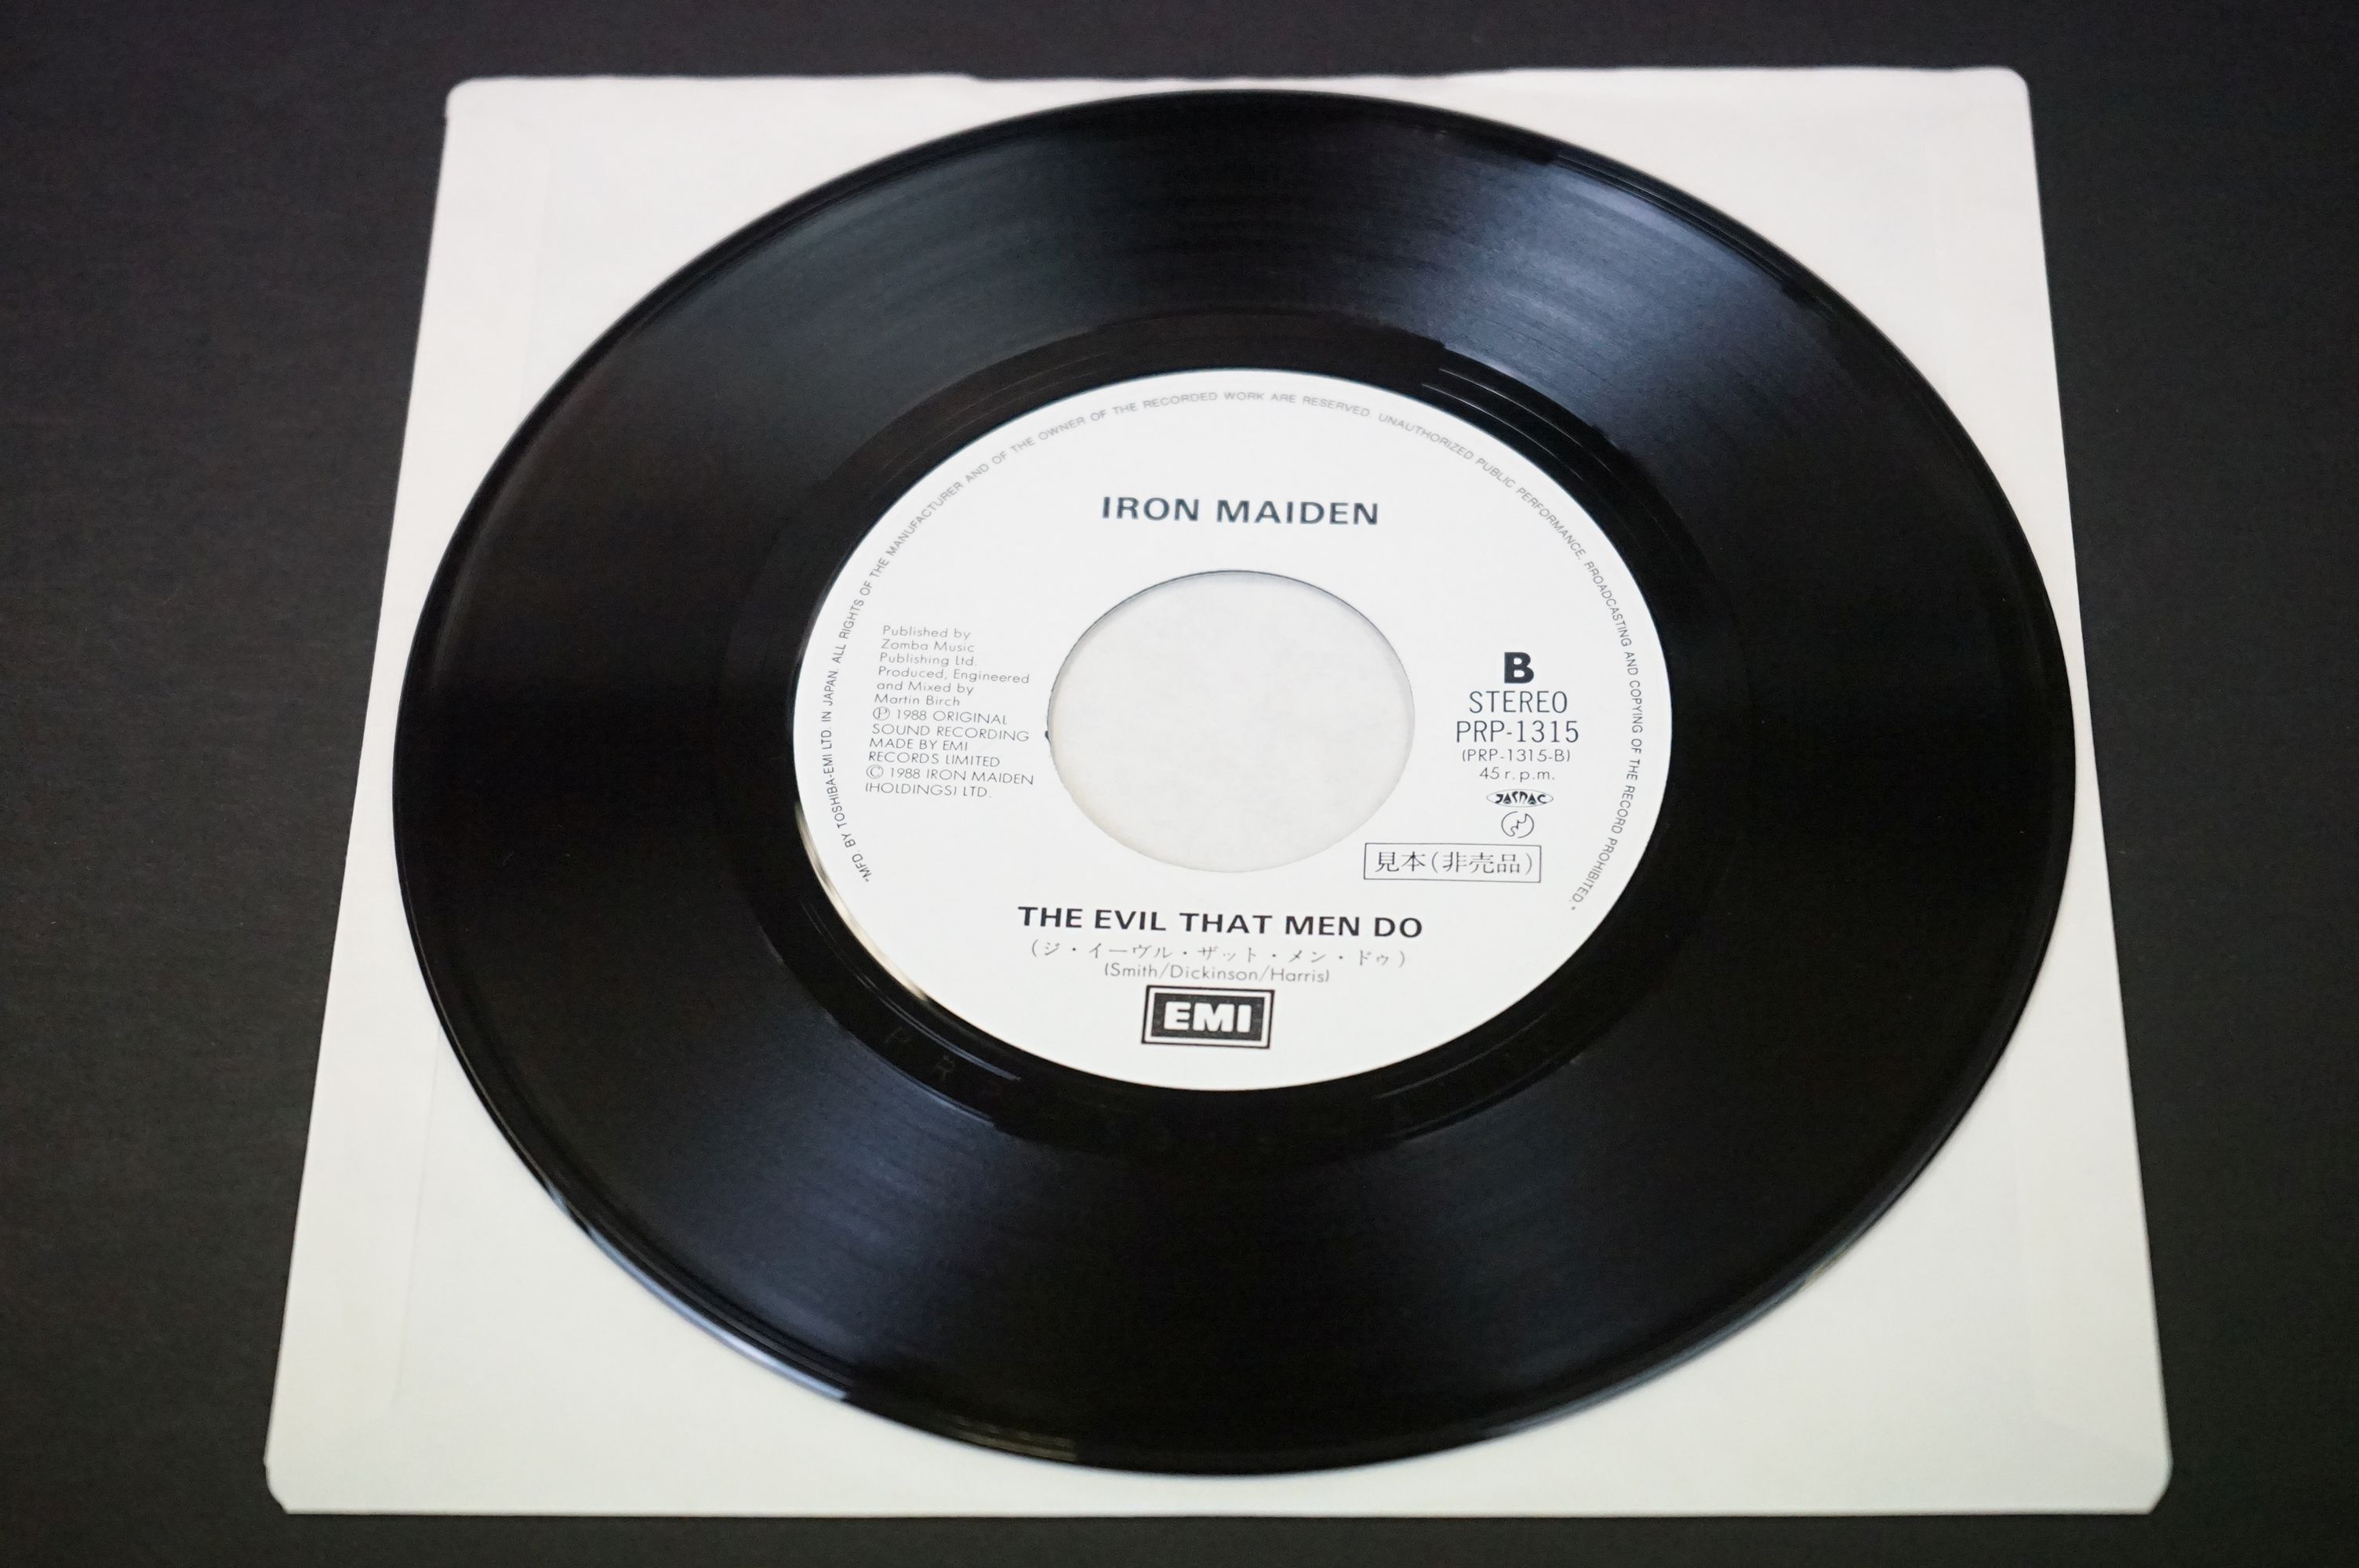 Vinyl - Iron Maiden The Evil That Men Do Japan only promo on EMI PRP-1315. NM - Image 5 of 7